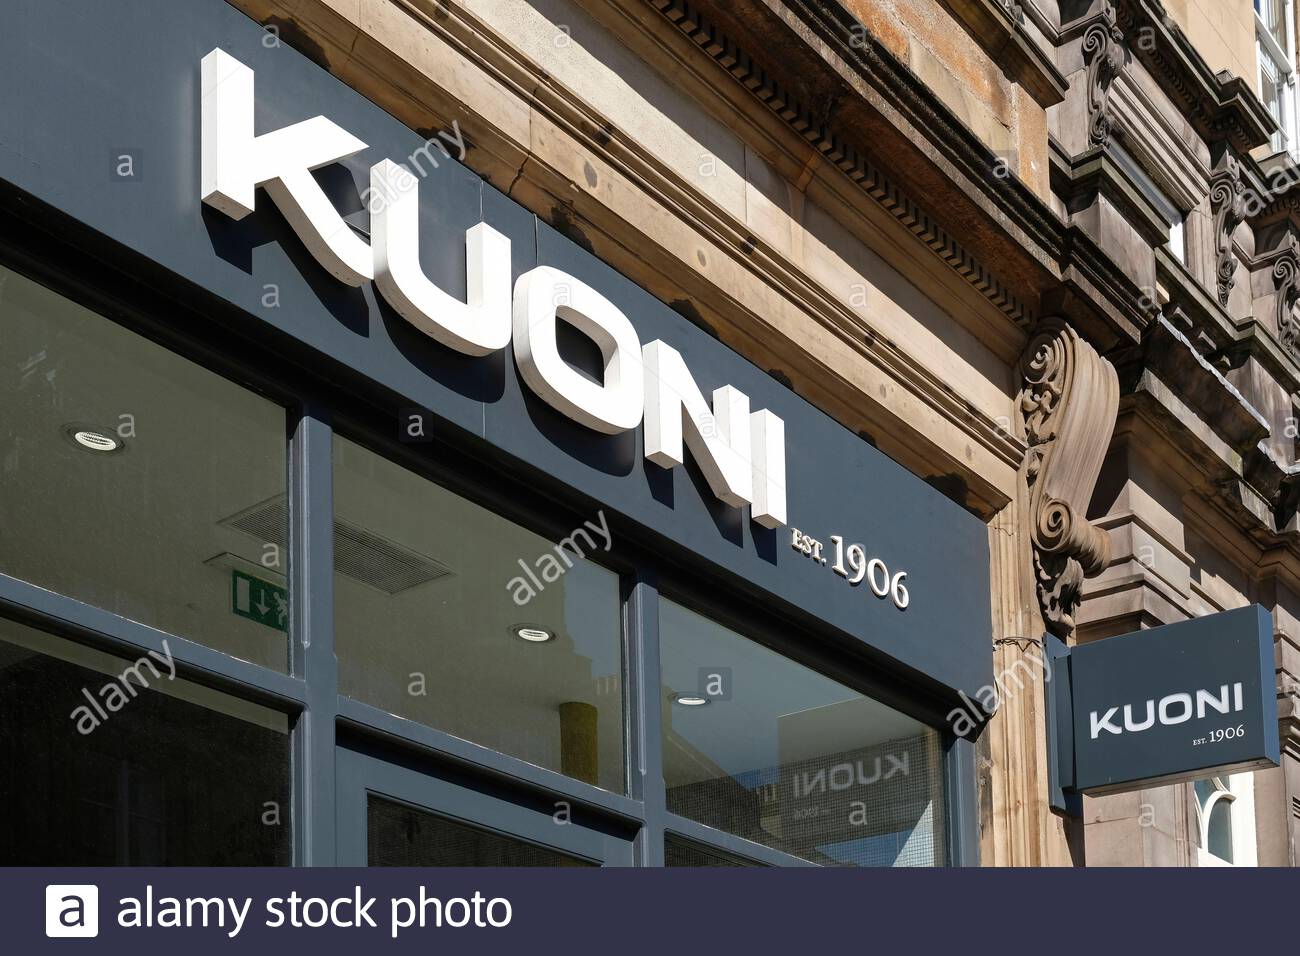 Kuoni travel agent sign, George Street, Edinburgh Scotland Stock Photo